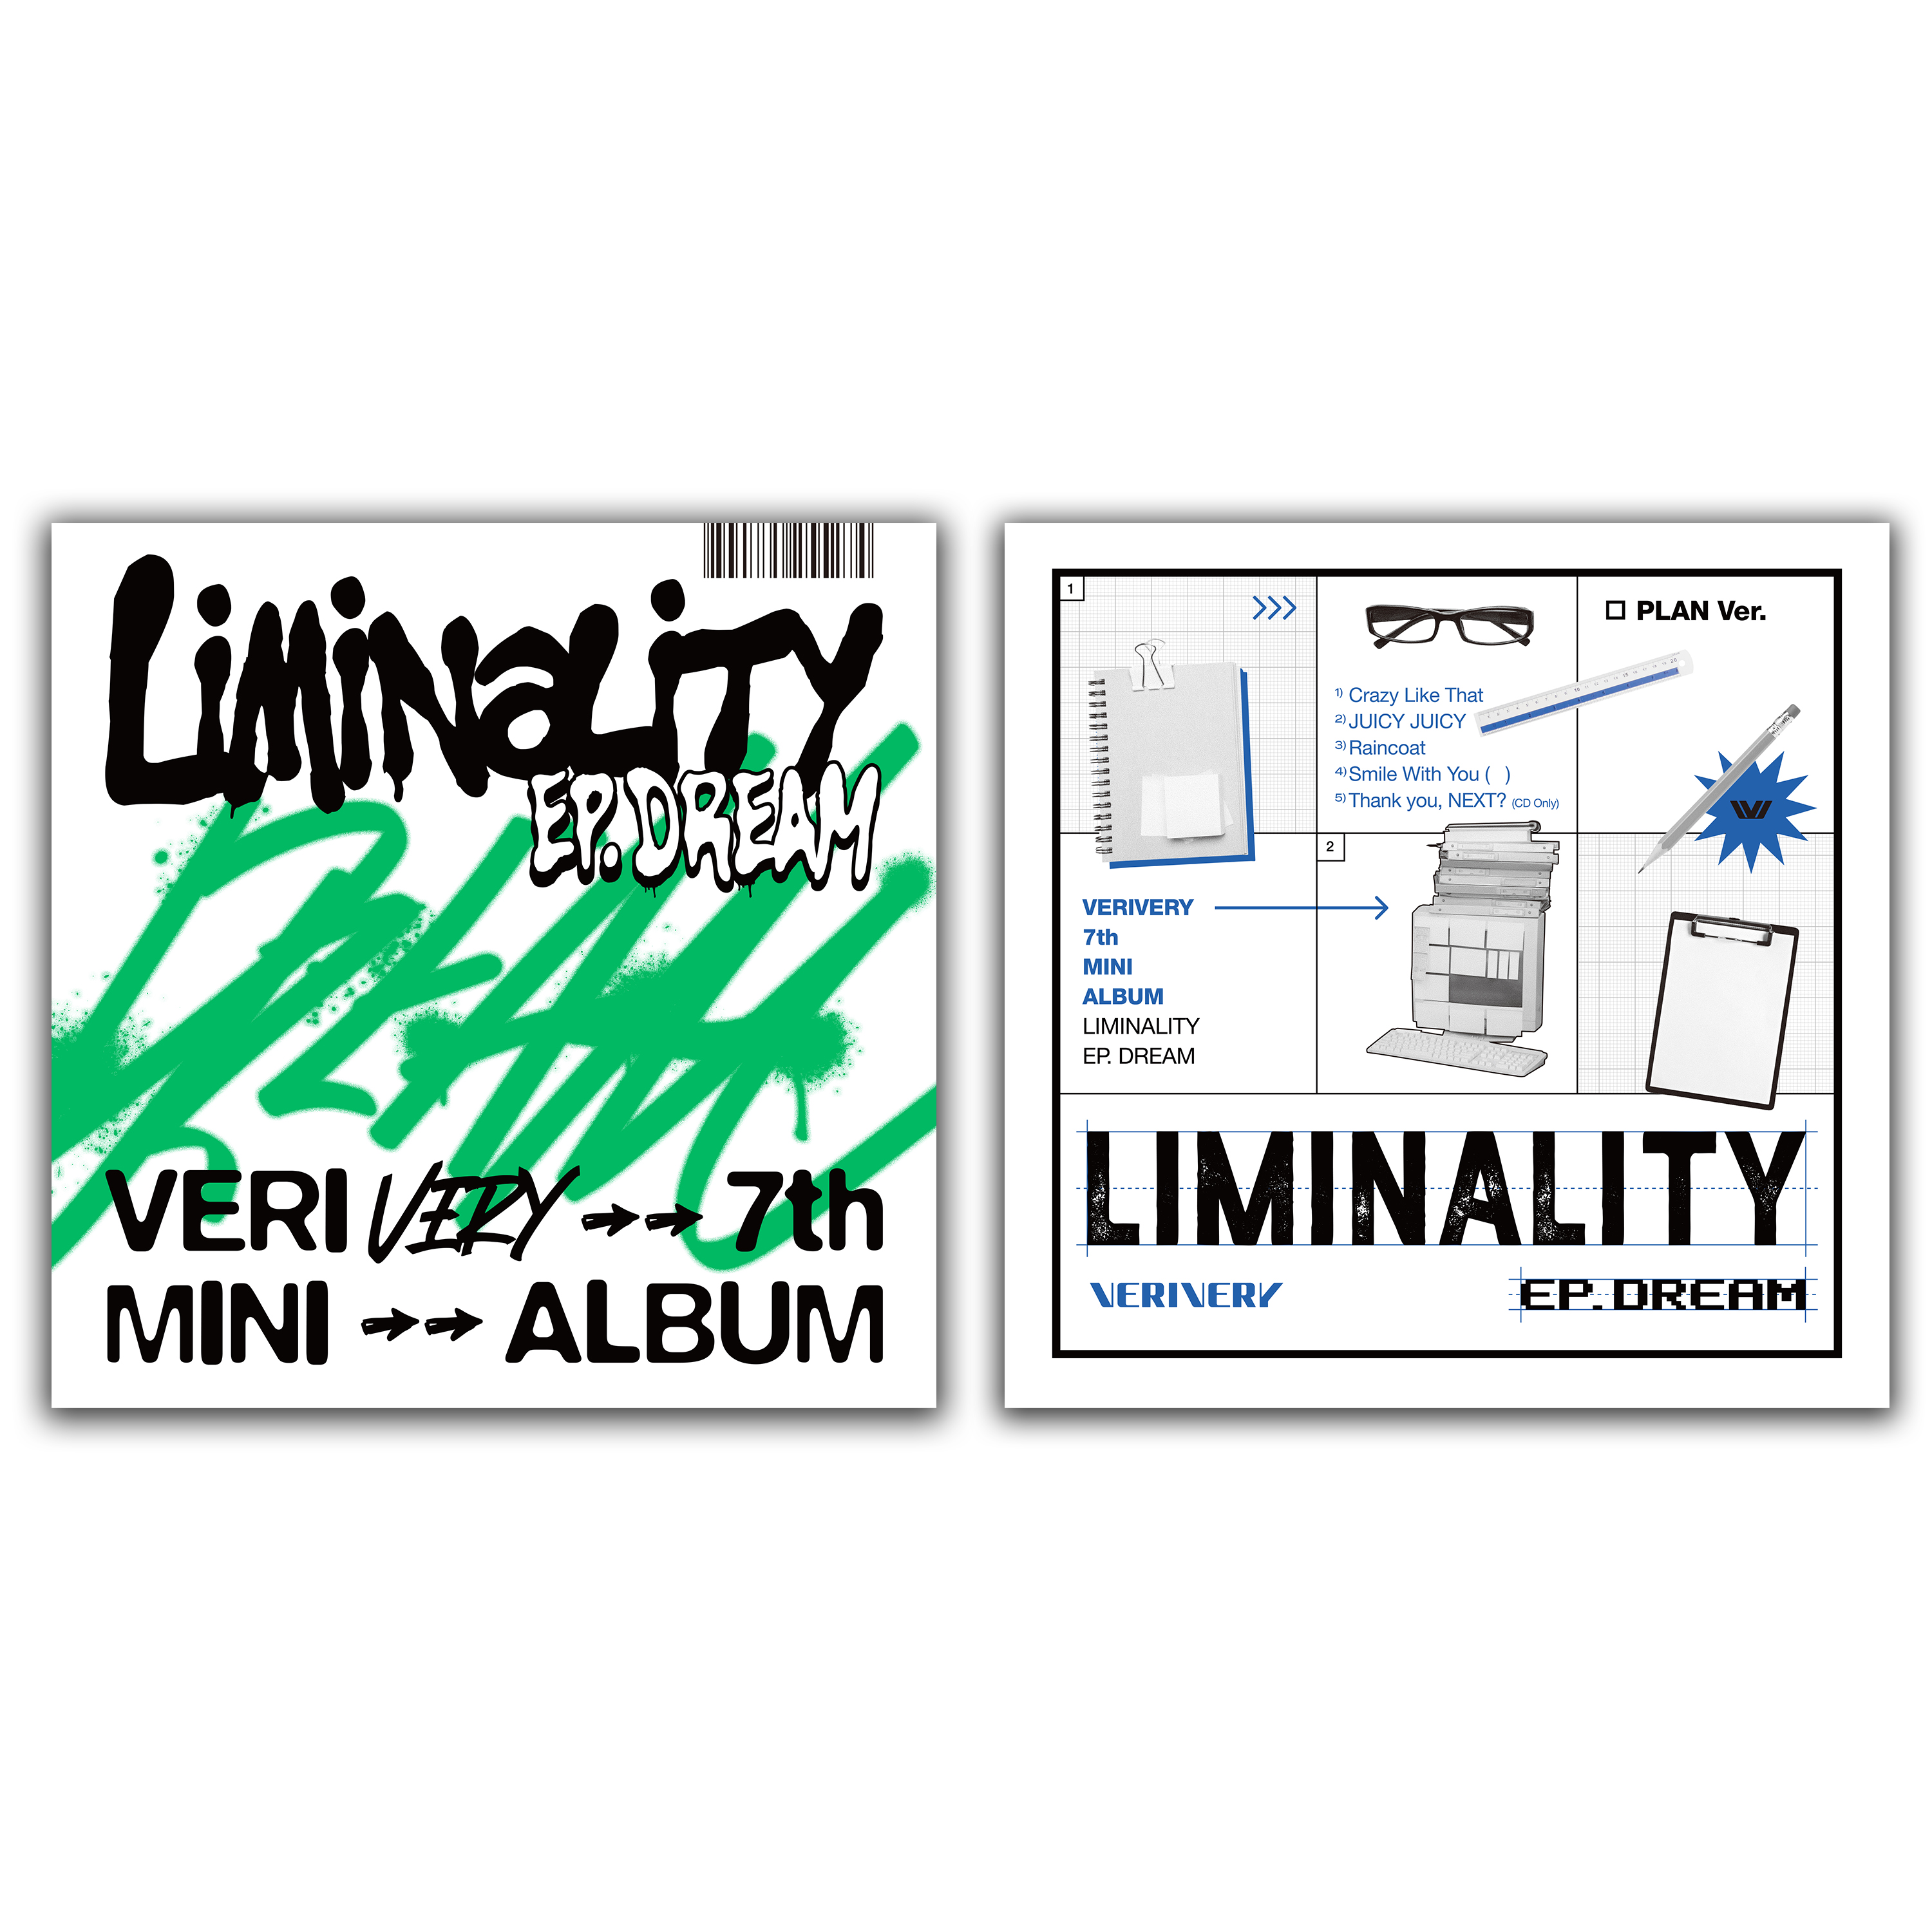 [2CD SET] VERIVERY - 7th Mini Album [Liminality - EP.DREAM] (PLAN ver. + PLAY ver.)케이팝스토어(kpop store)